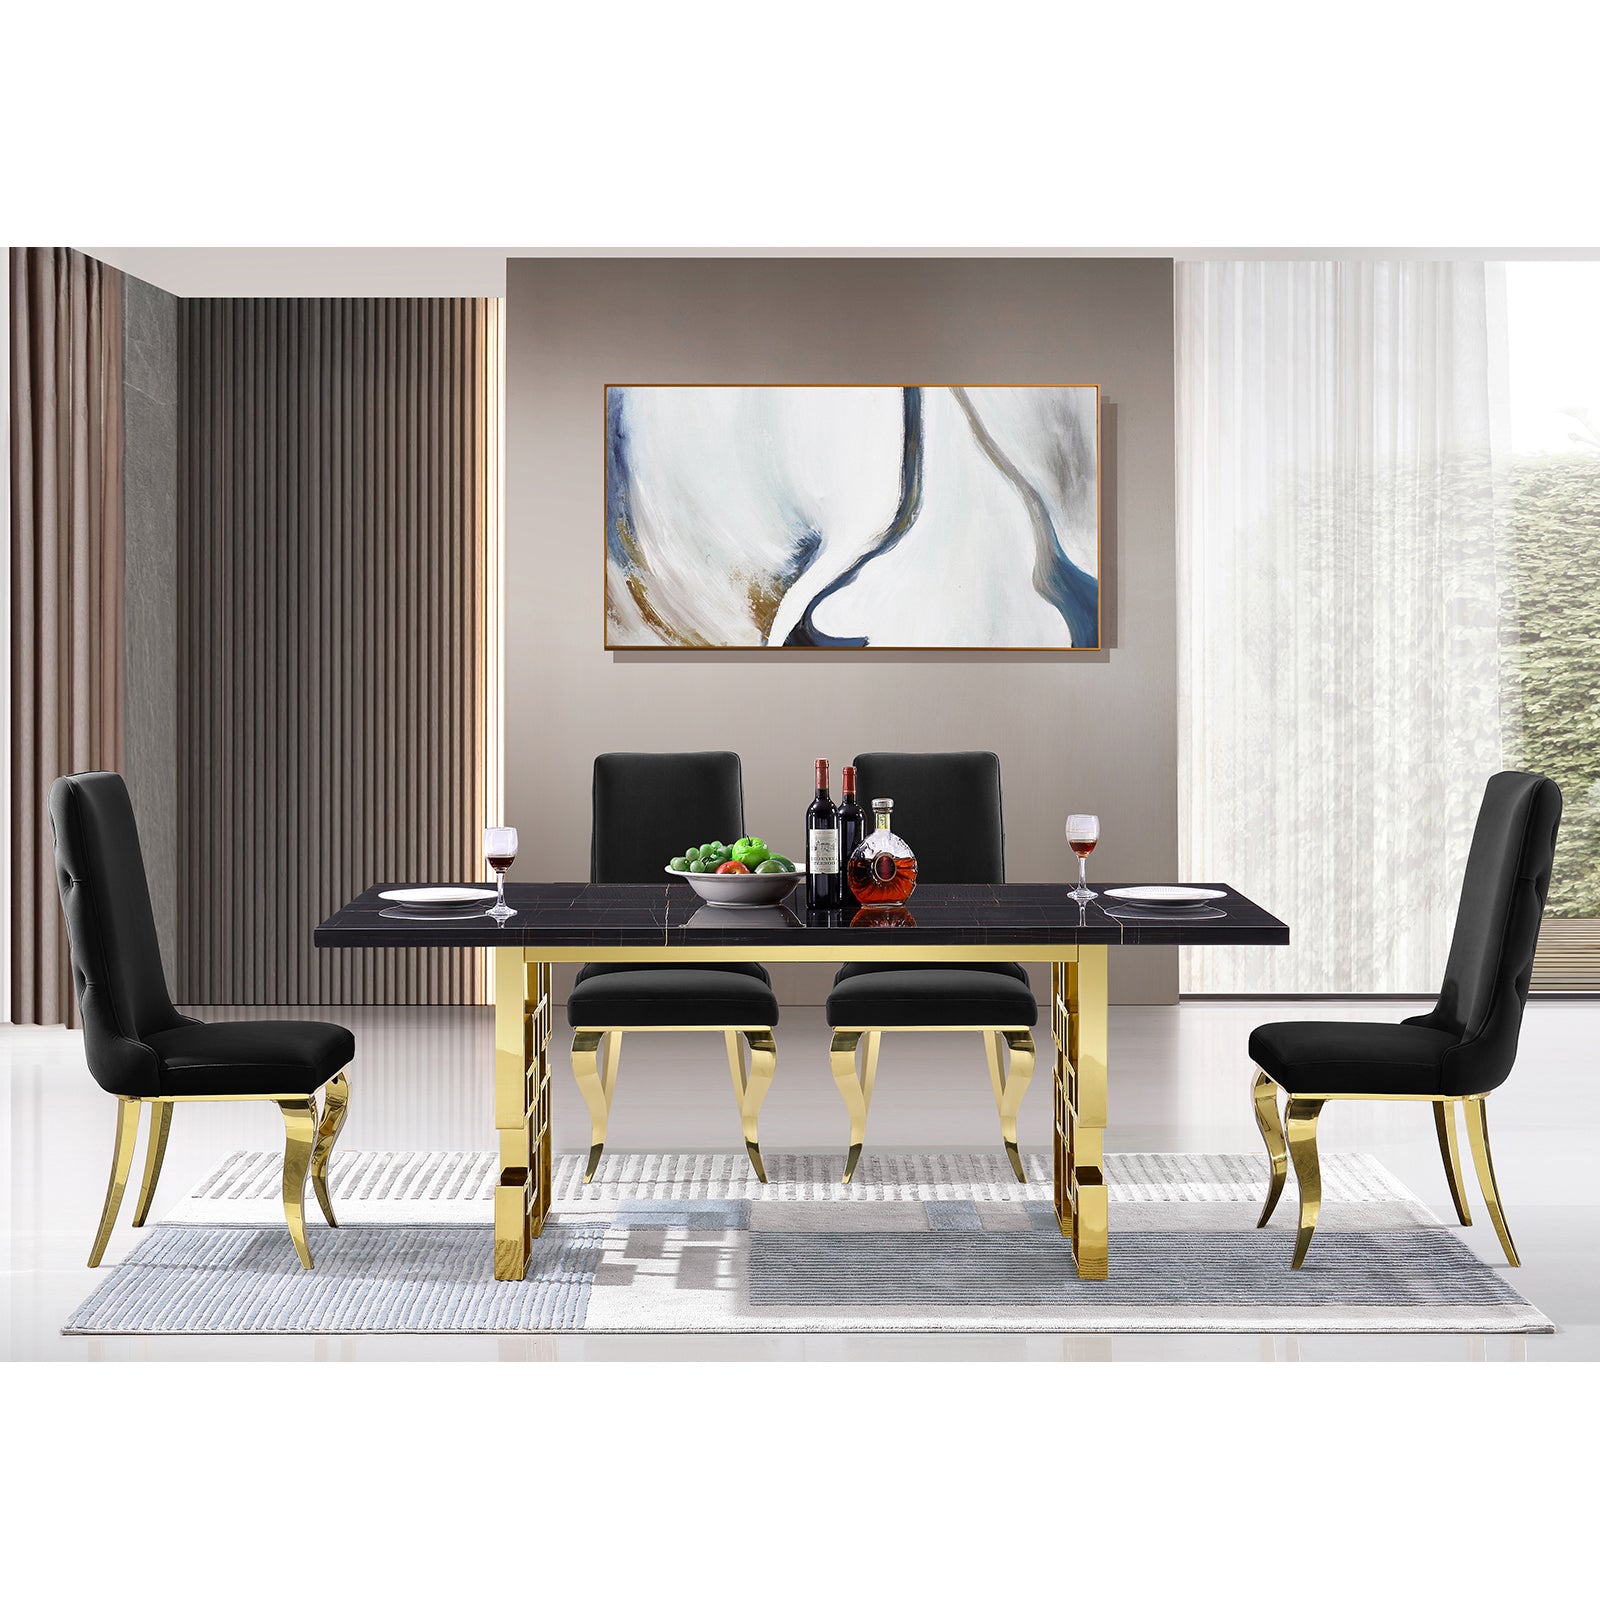 692 Set | AUZ Black and Gold Dining room Sets for 6